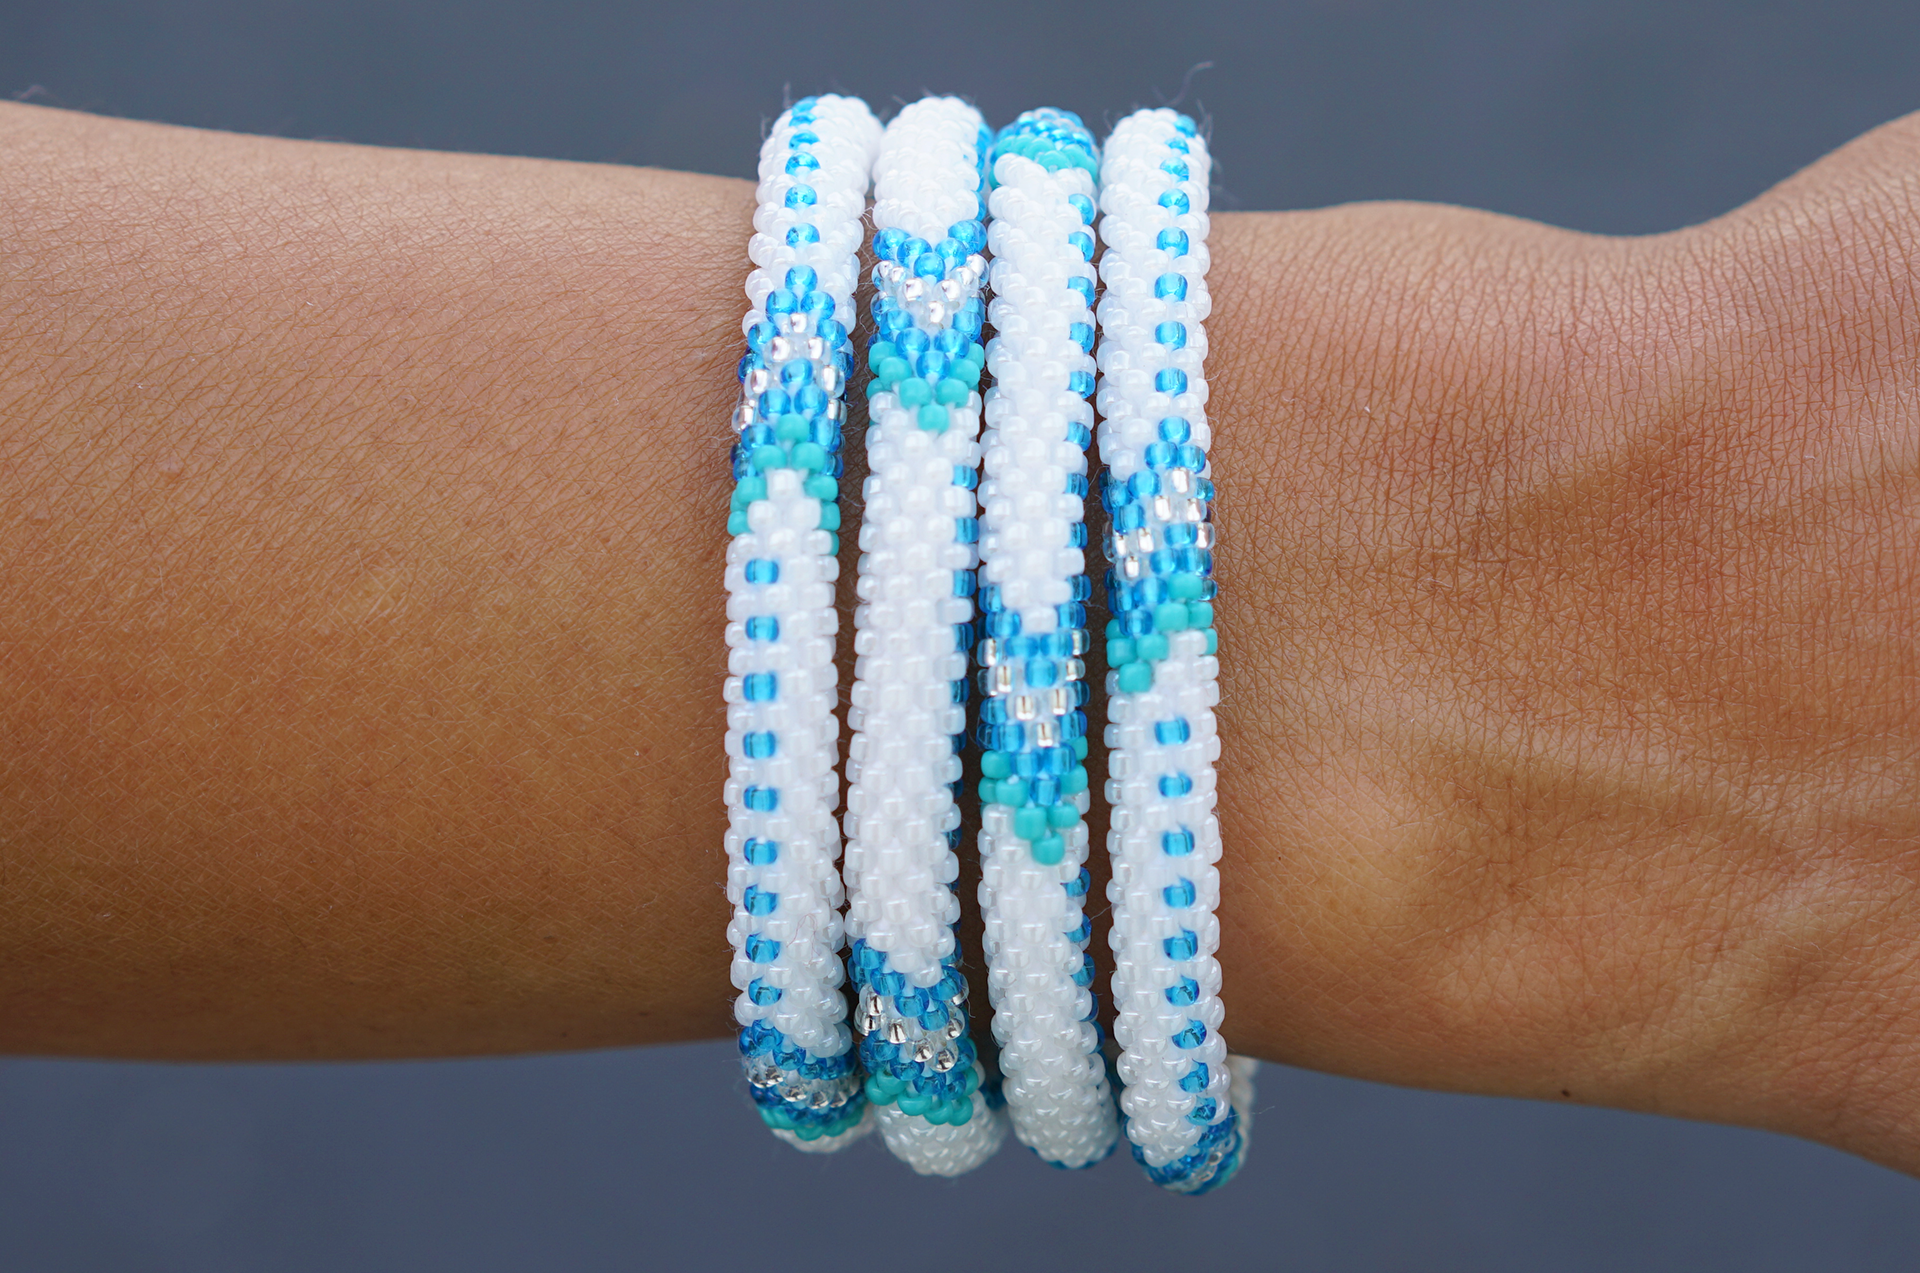 Sashka Co. Original Bracelet Blue / Turquoise / White / Clear Salt Water Bracelet